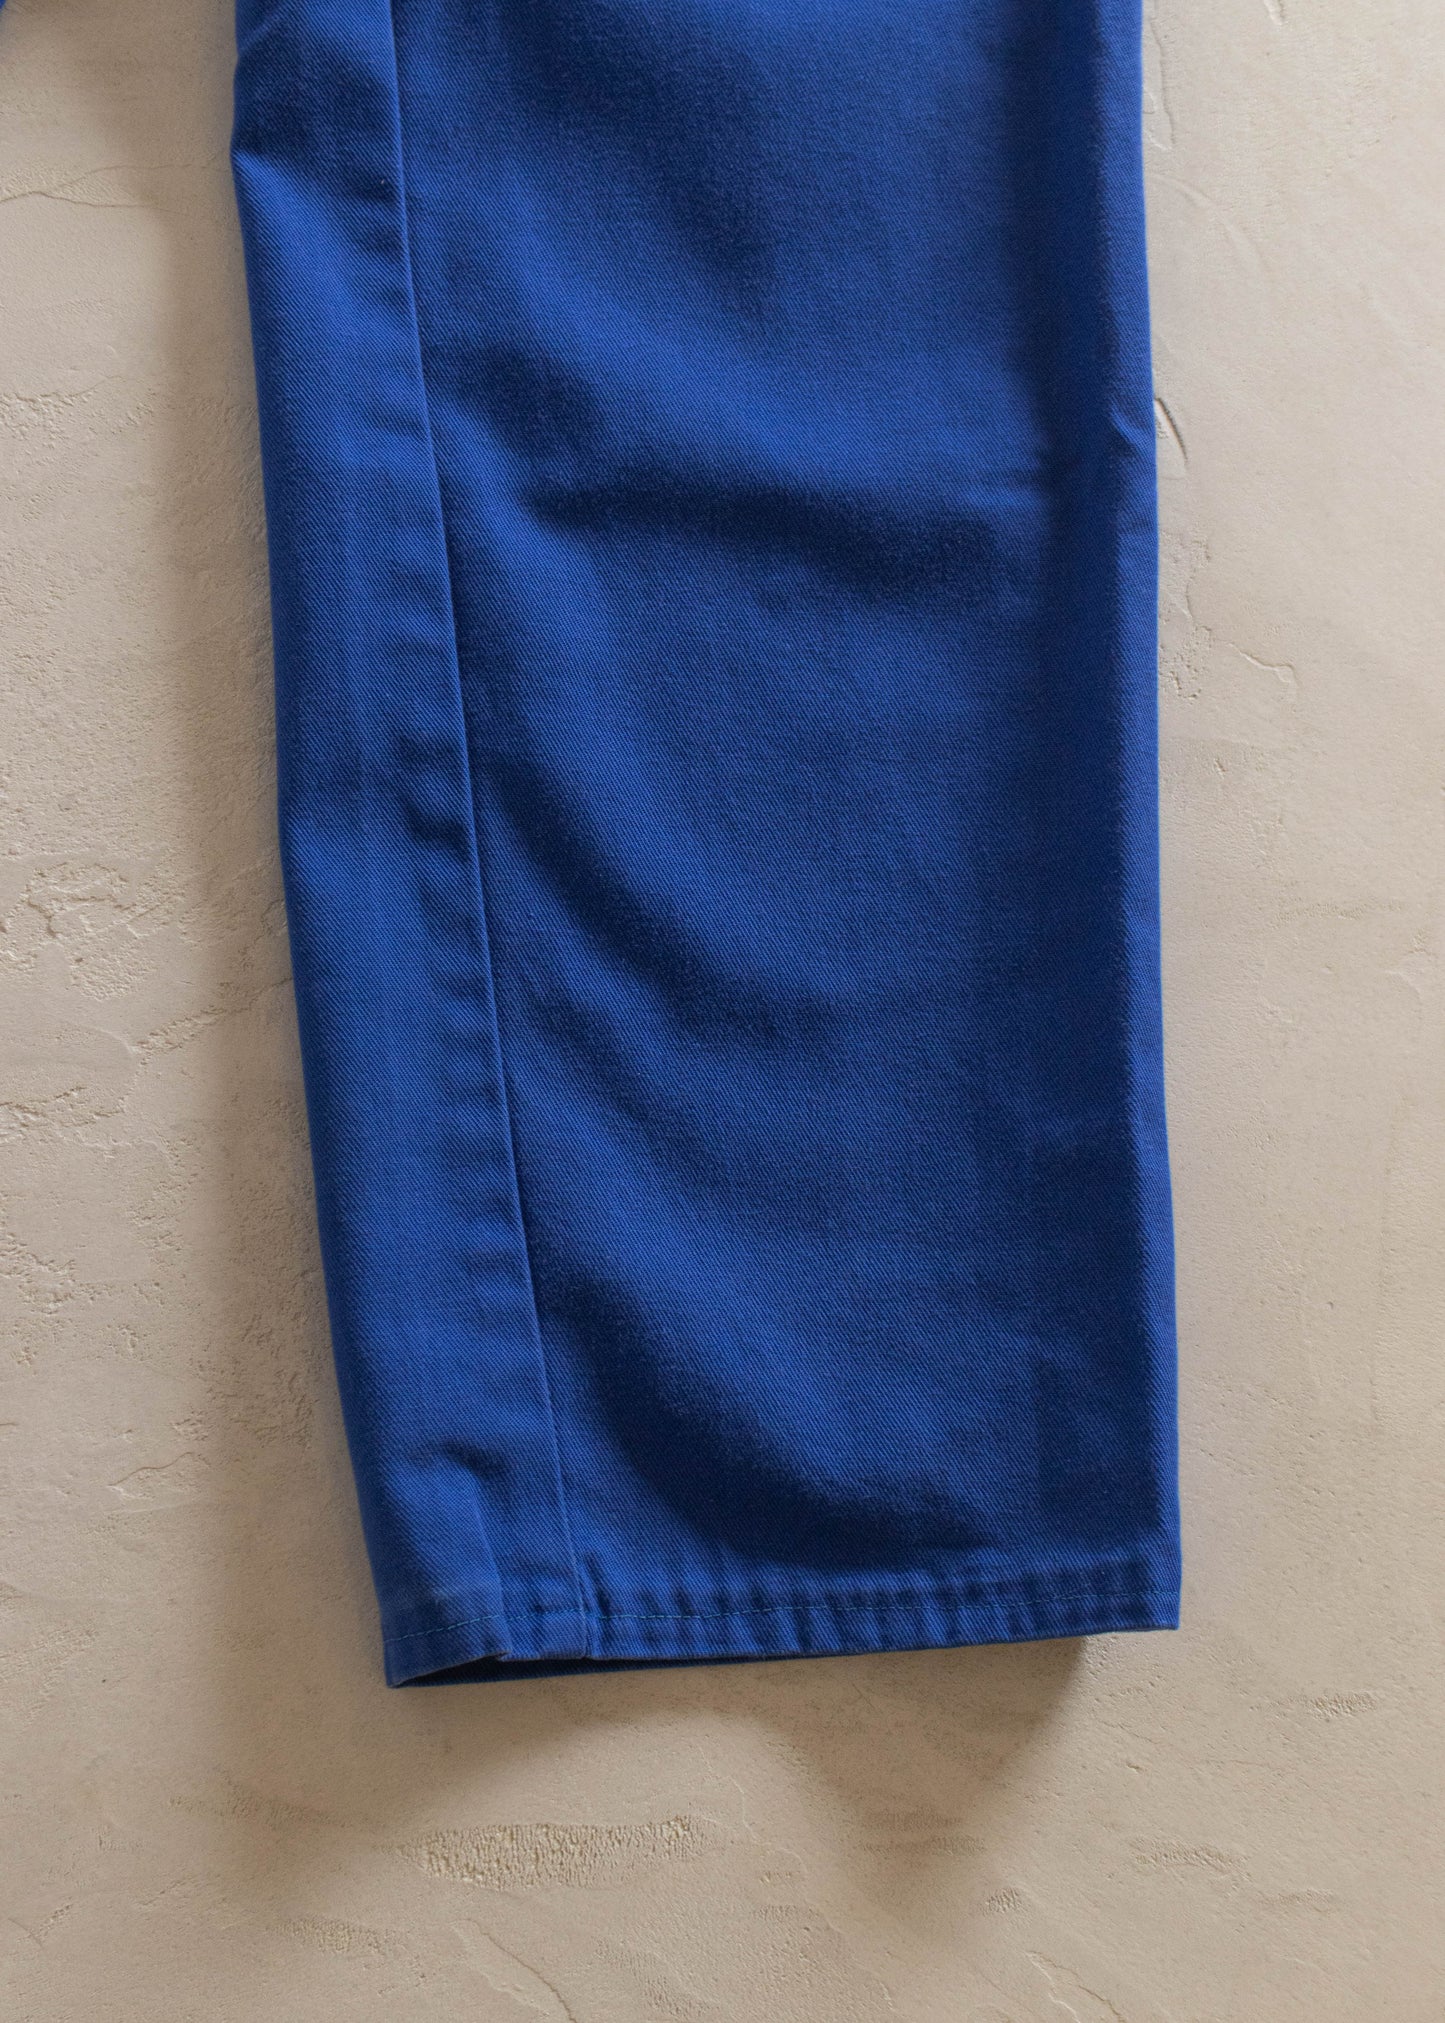 1980s Molinel French Workwear Chore Pants Size Women's 30 Men's 32